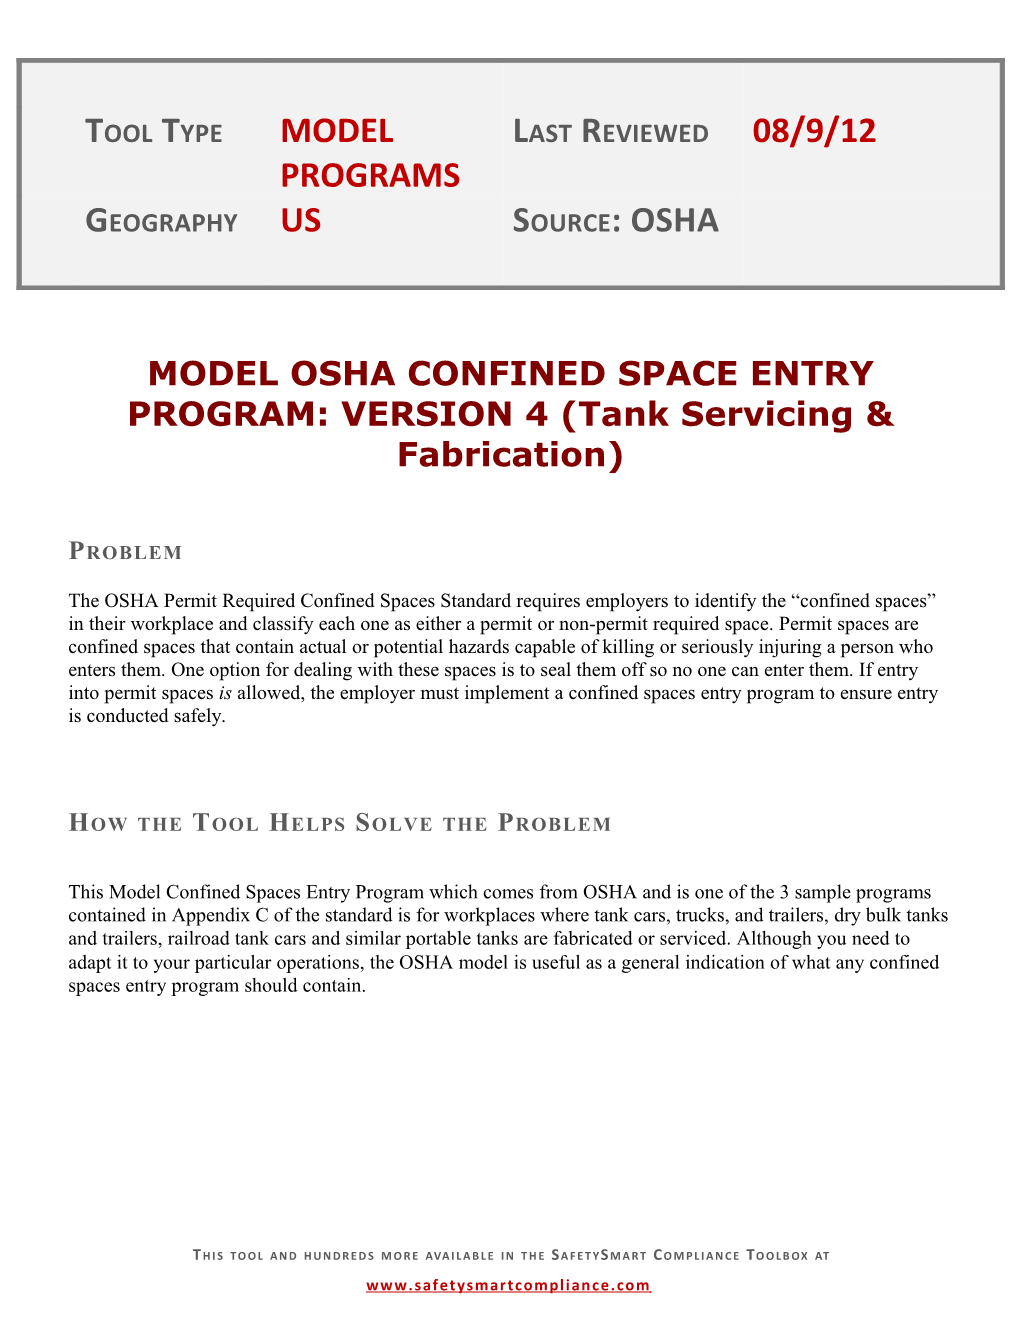 MODEL OSHA CONFINED SPACE ENTRY PROGRAM: VERSION 4 (Tank Servicing & Fabrication)